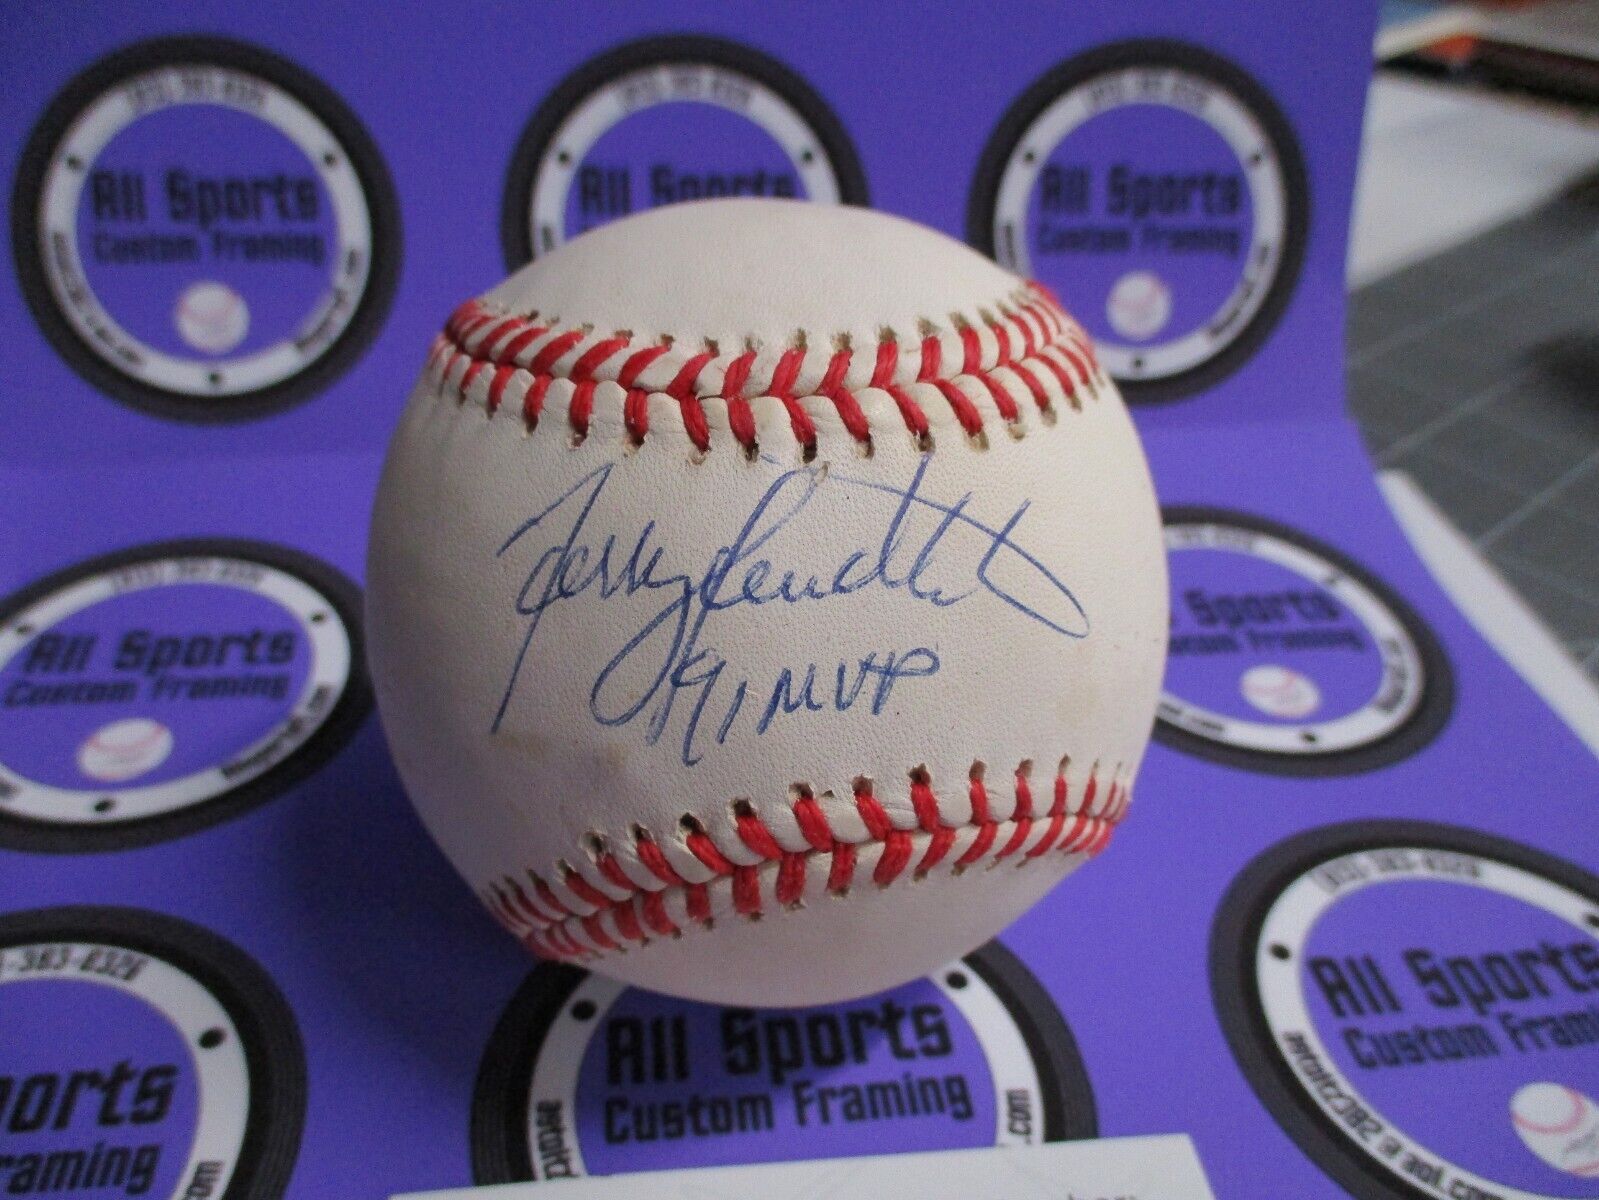 Terry Pendleton Atlanta Braves Autographed Baseball JSA #AD604491 1991 MVP Ins